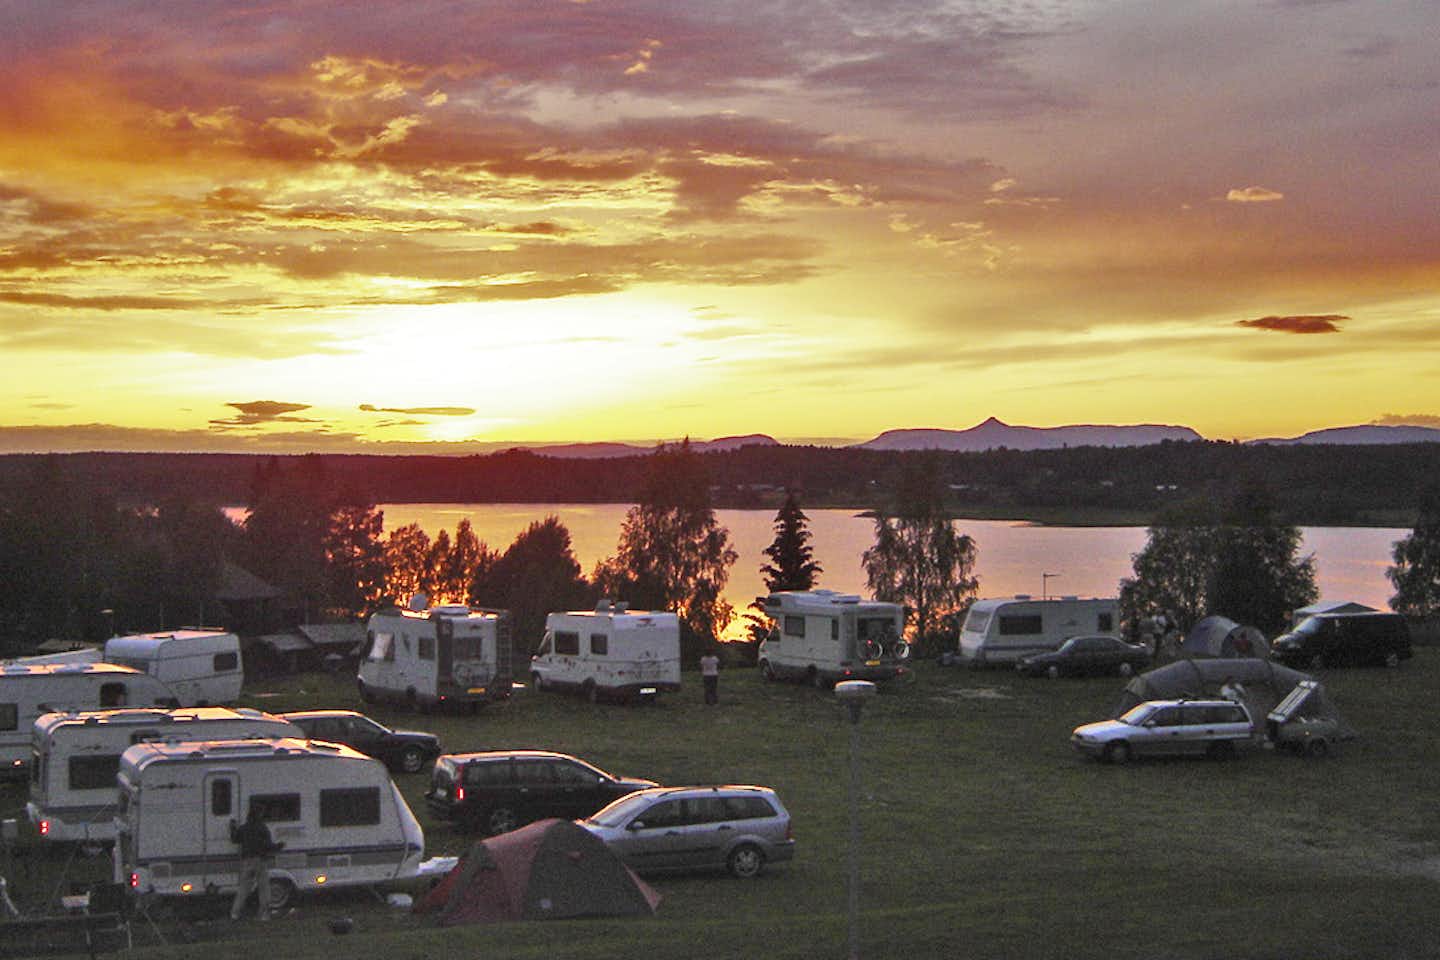 Särna Camping - Sonnenuntergang über der Standplatzwiese am See